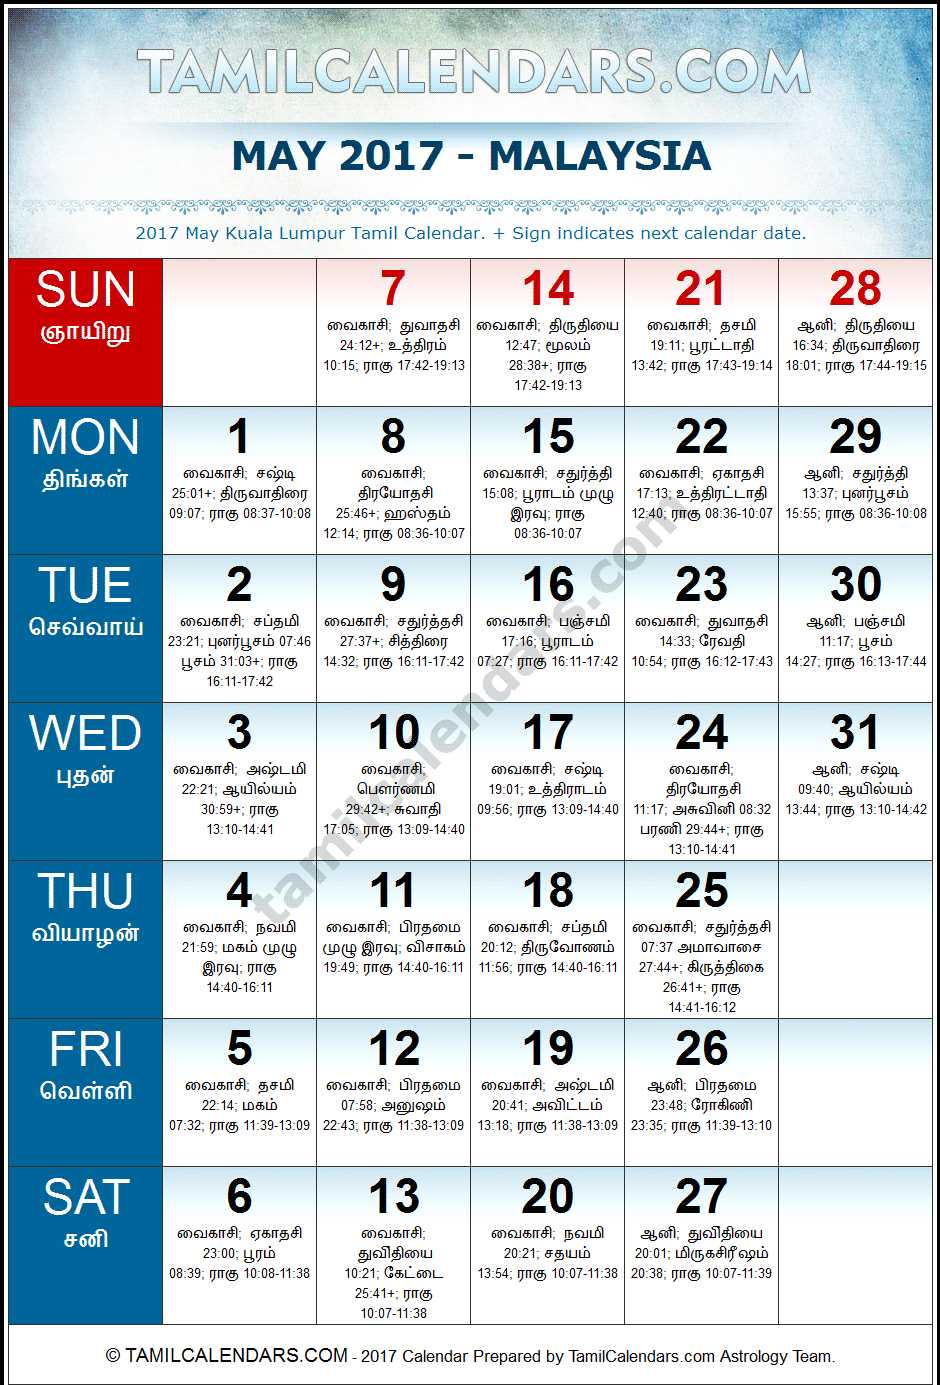 May 2017 Tamil Calendar for Malaysia (Kuala Lumpur)